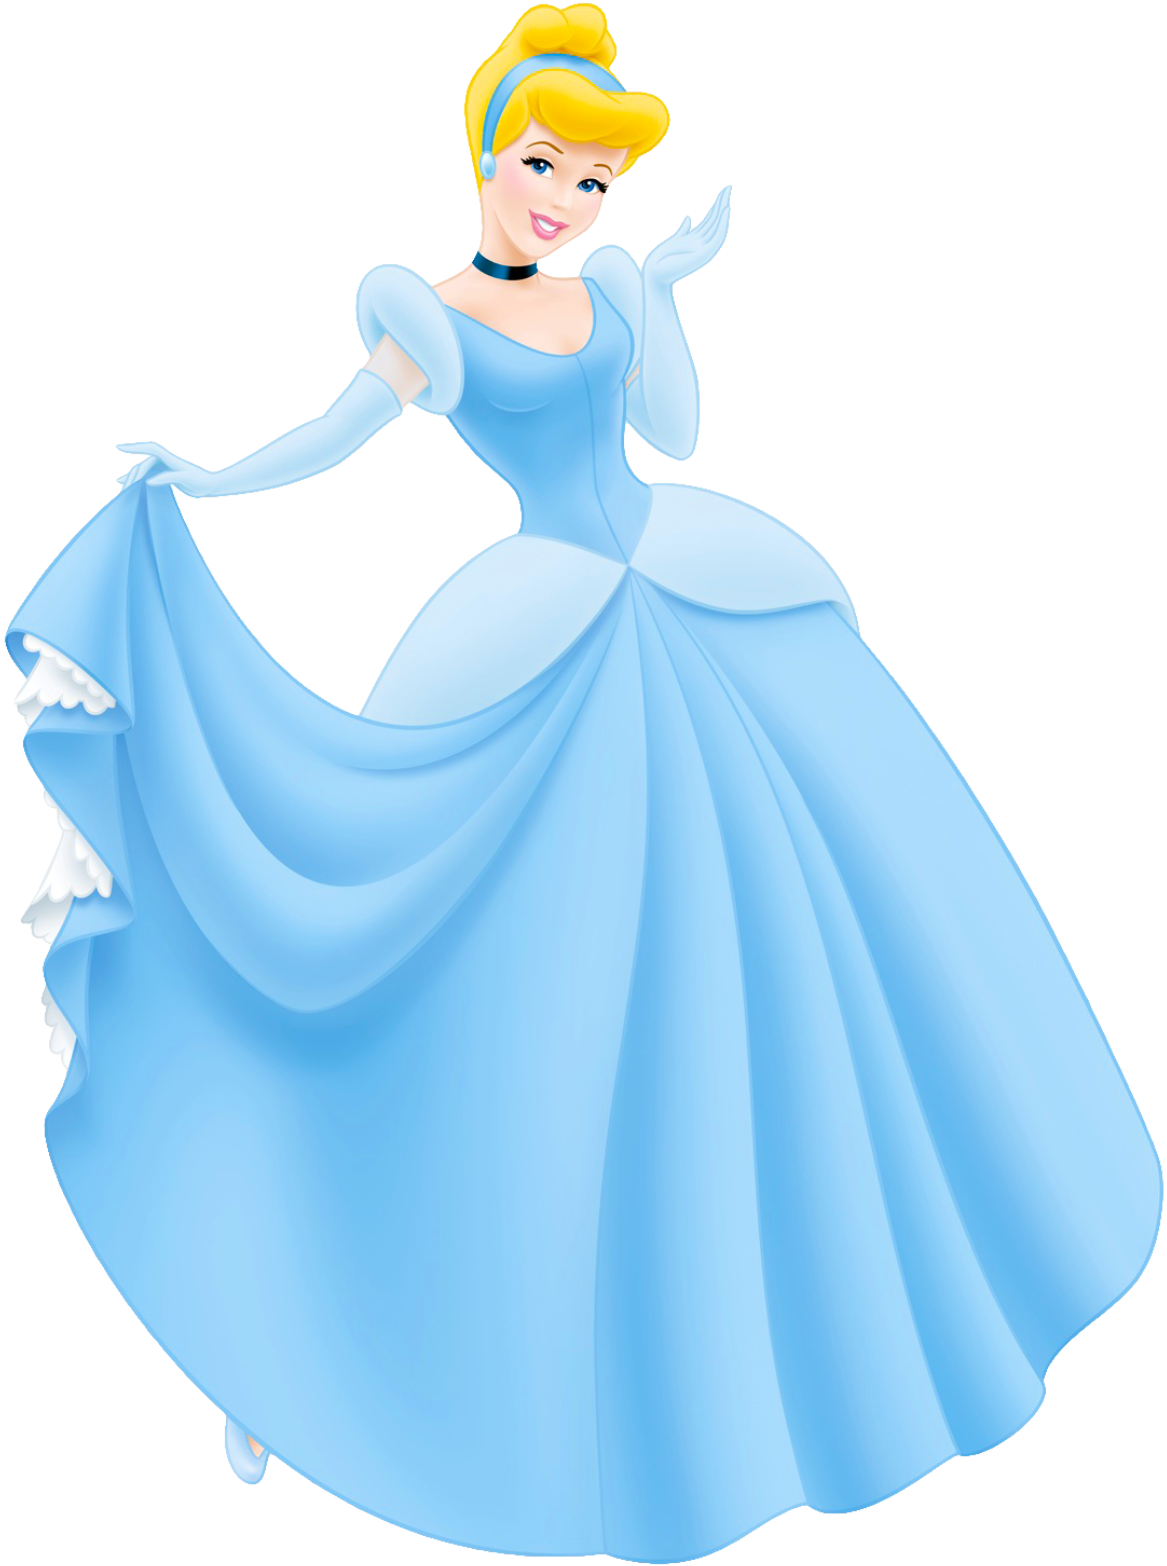 Cinderella | Walt Disney Animation Studios Wikia | Fandom